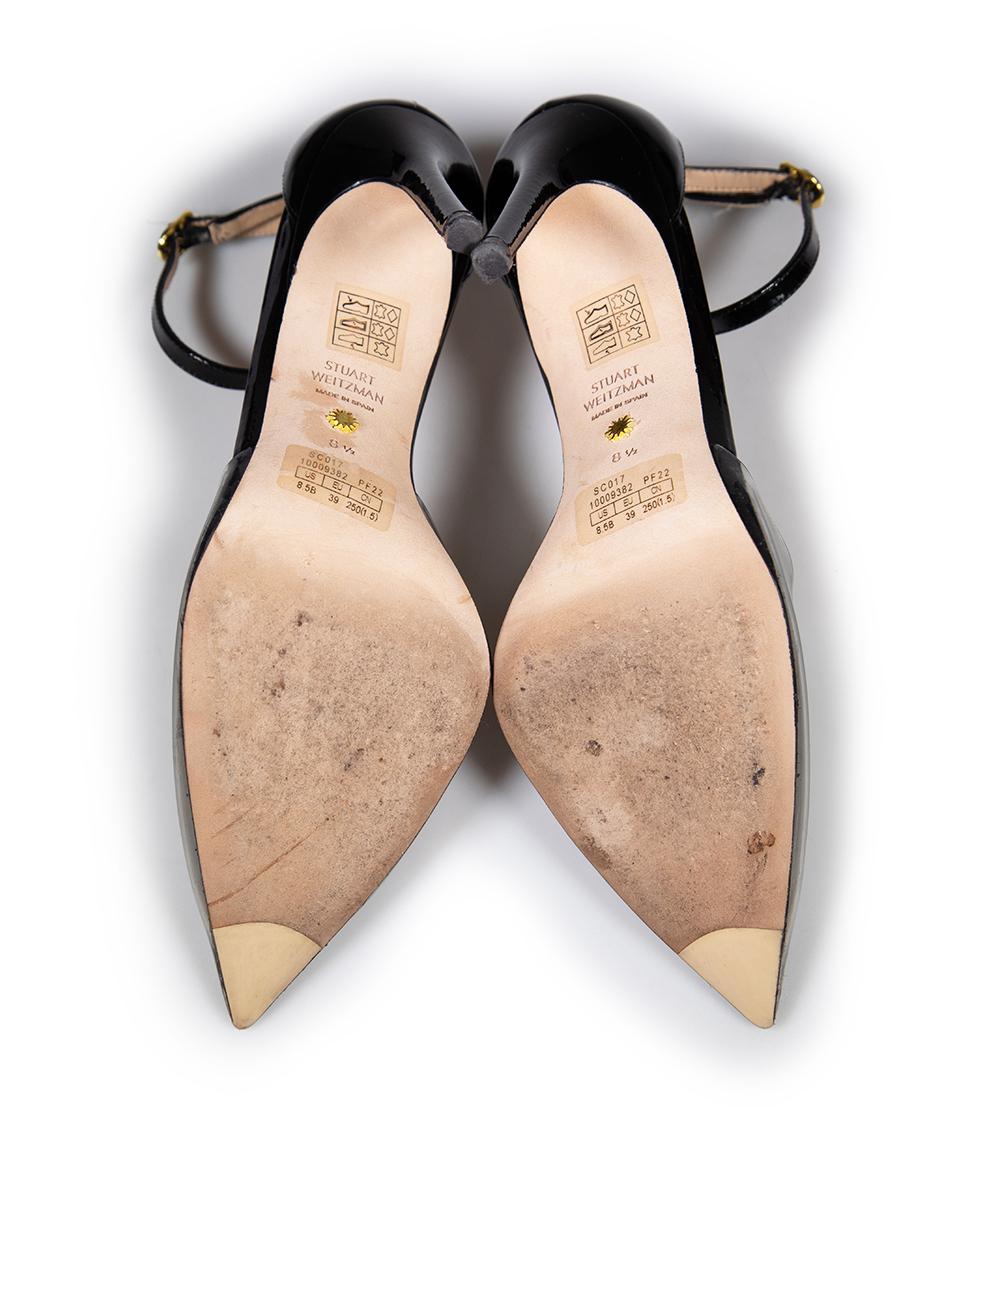 Women's Stuart Weitzman PVC Pointed Toe Heels Size US 8.5 For Sale